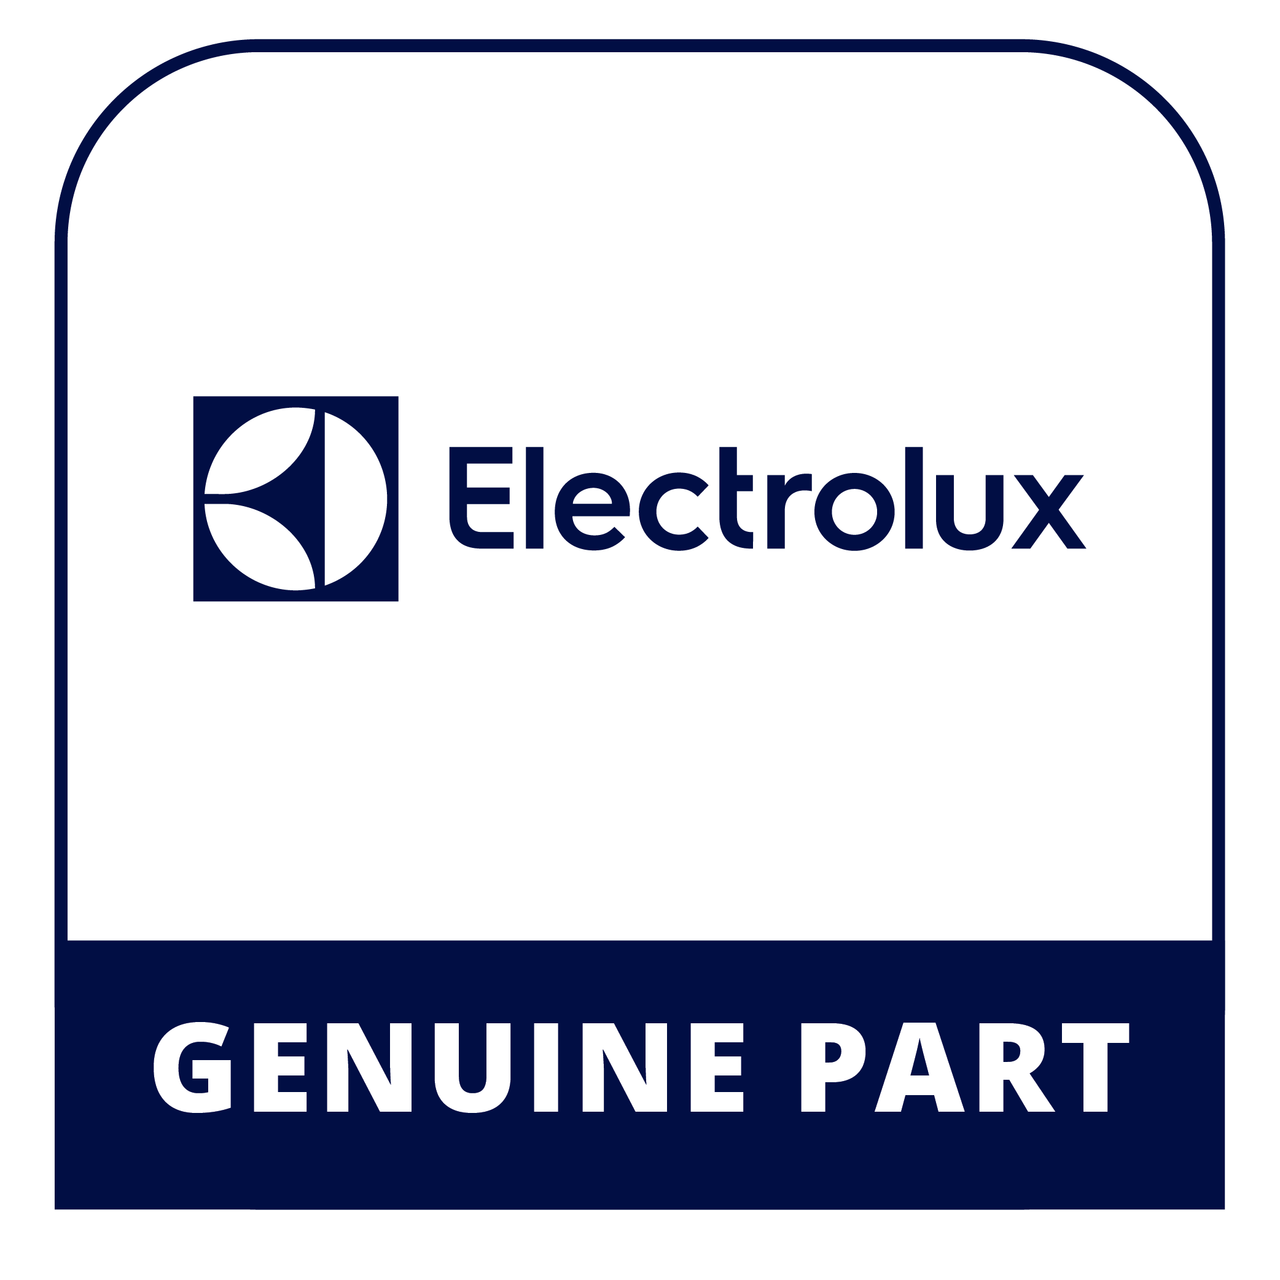 Frigidaire - Electrolux 5304468822 Demo Cord - Genuine Electrolux Part